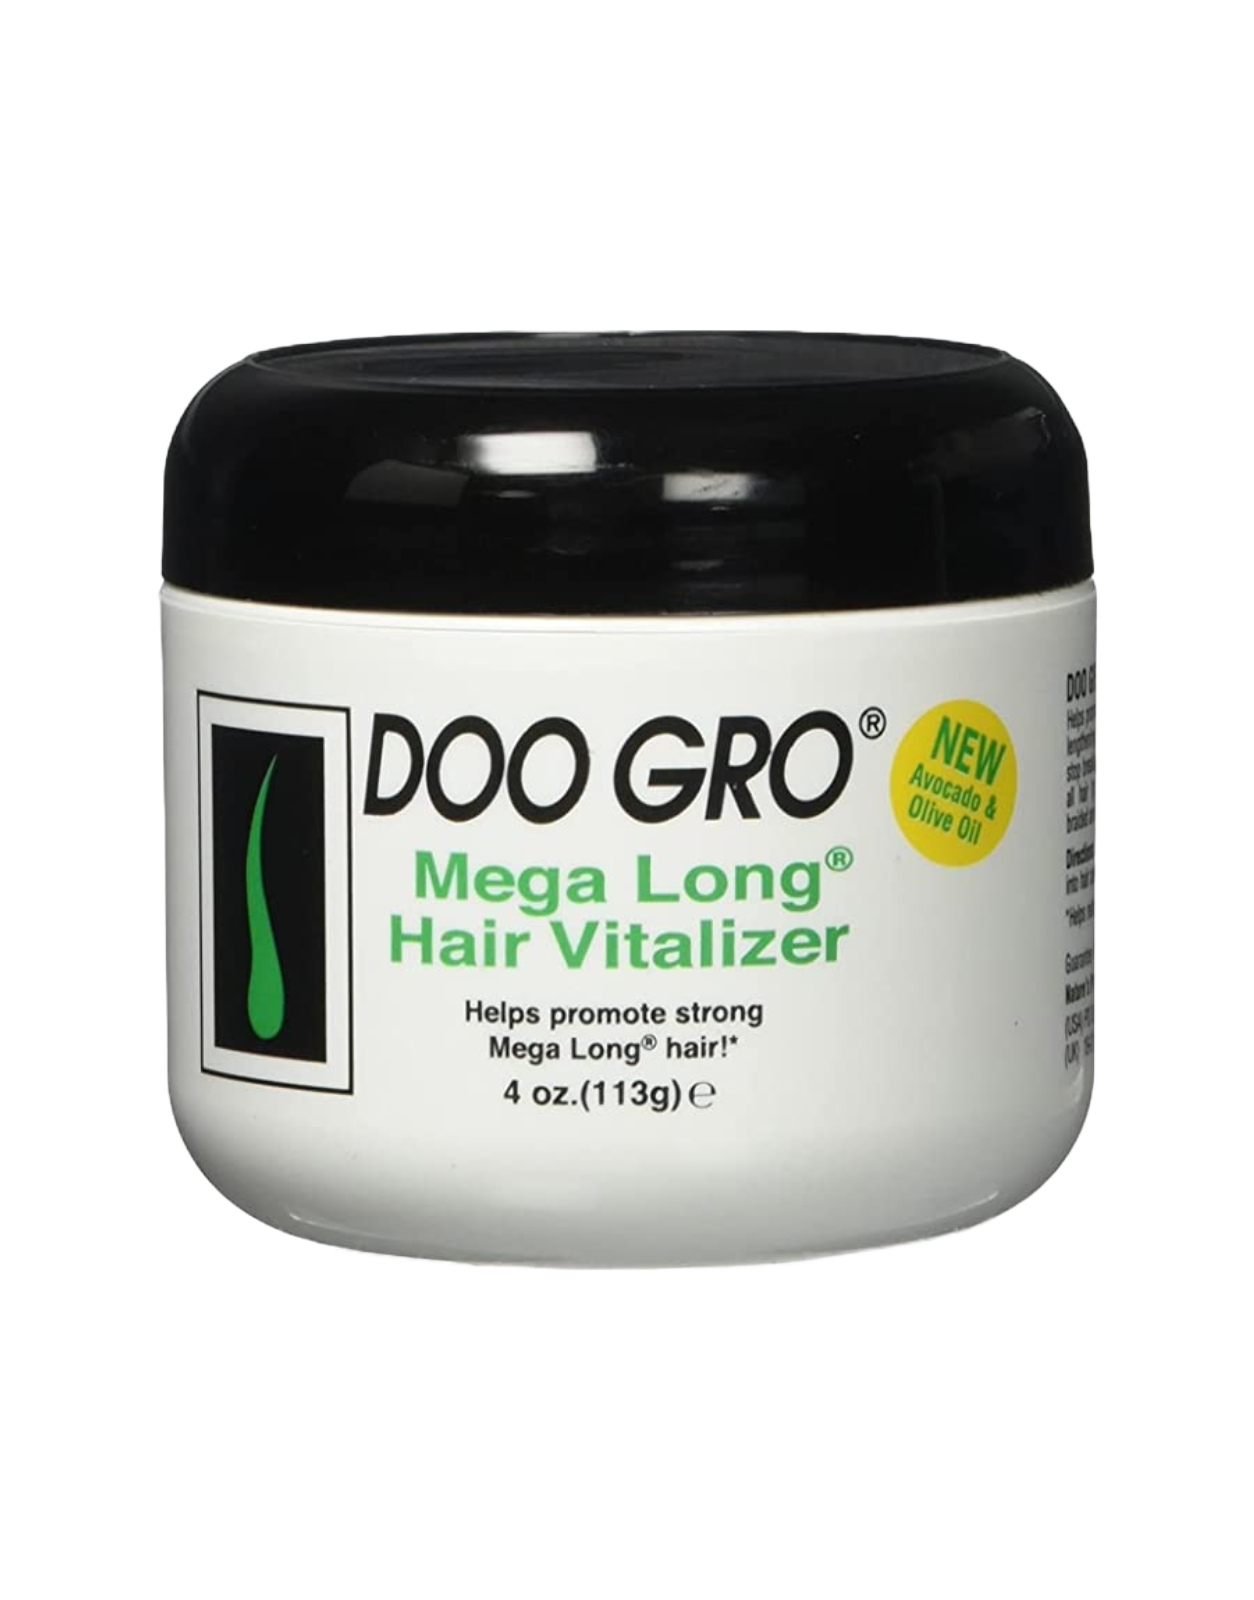 DOO GRO - Hair Vitalizer Mega Long Paraben-Free Formula